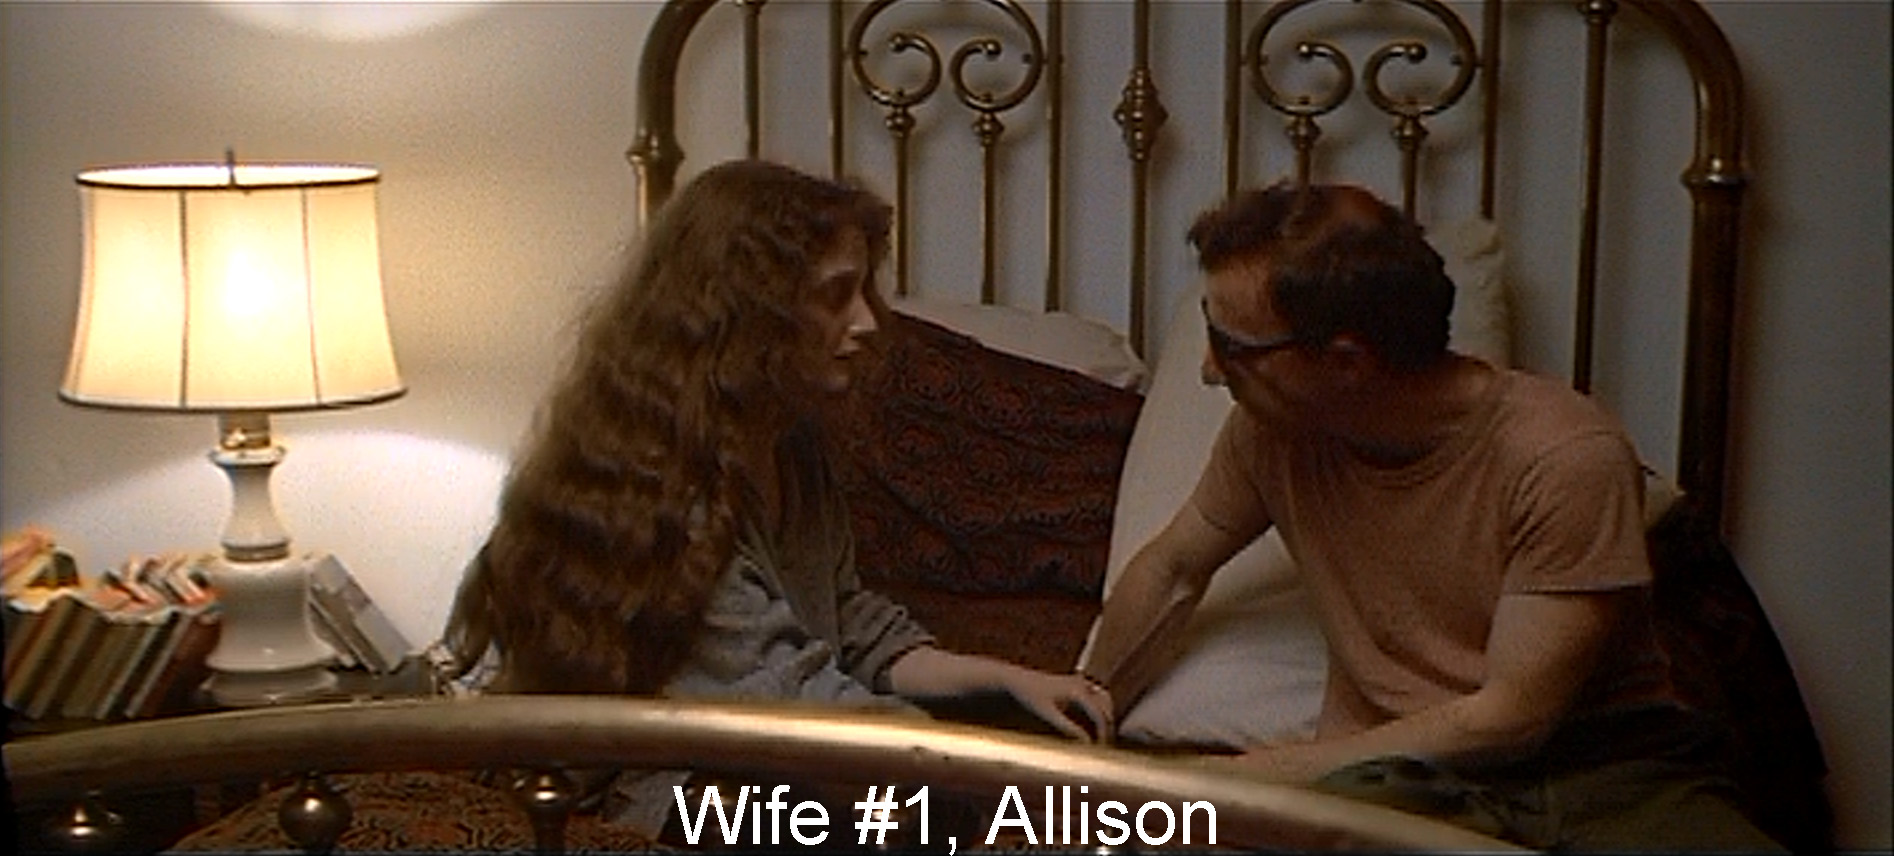  Wife #1, Allison